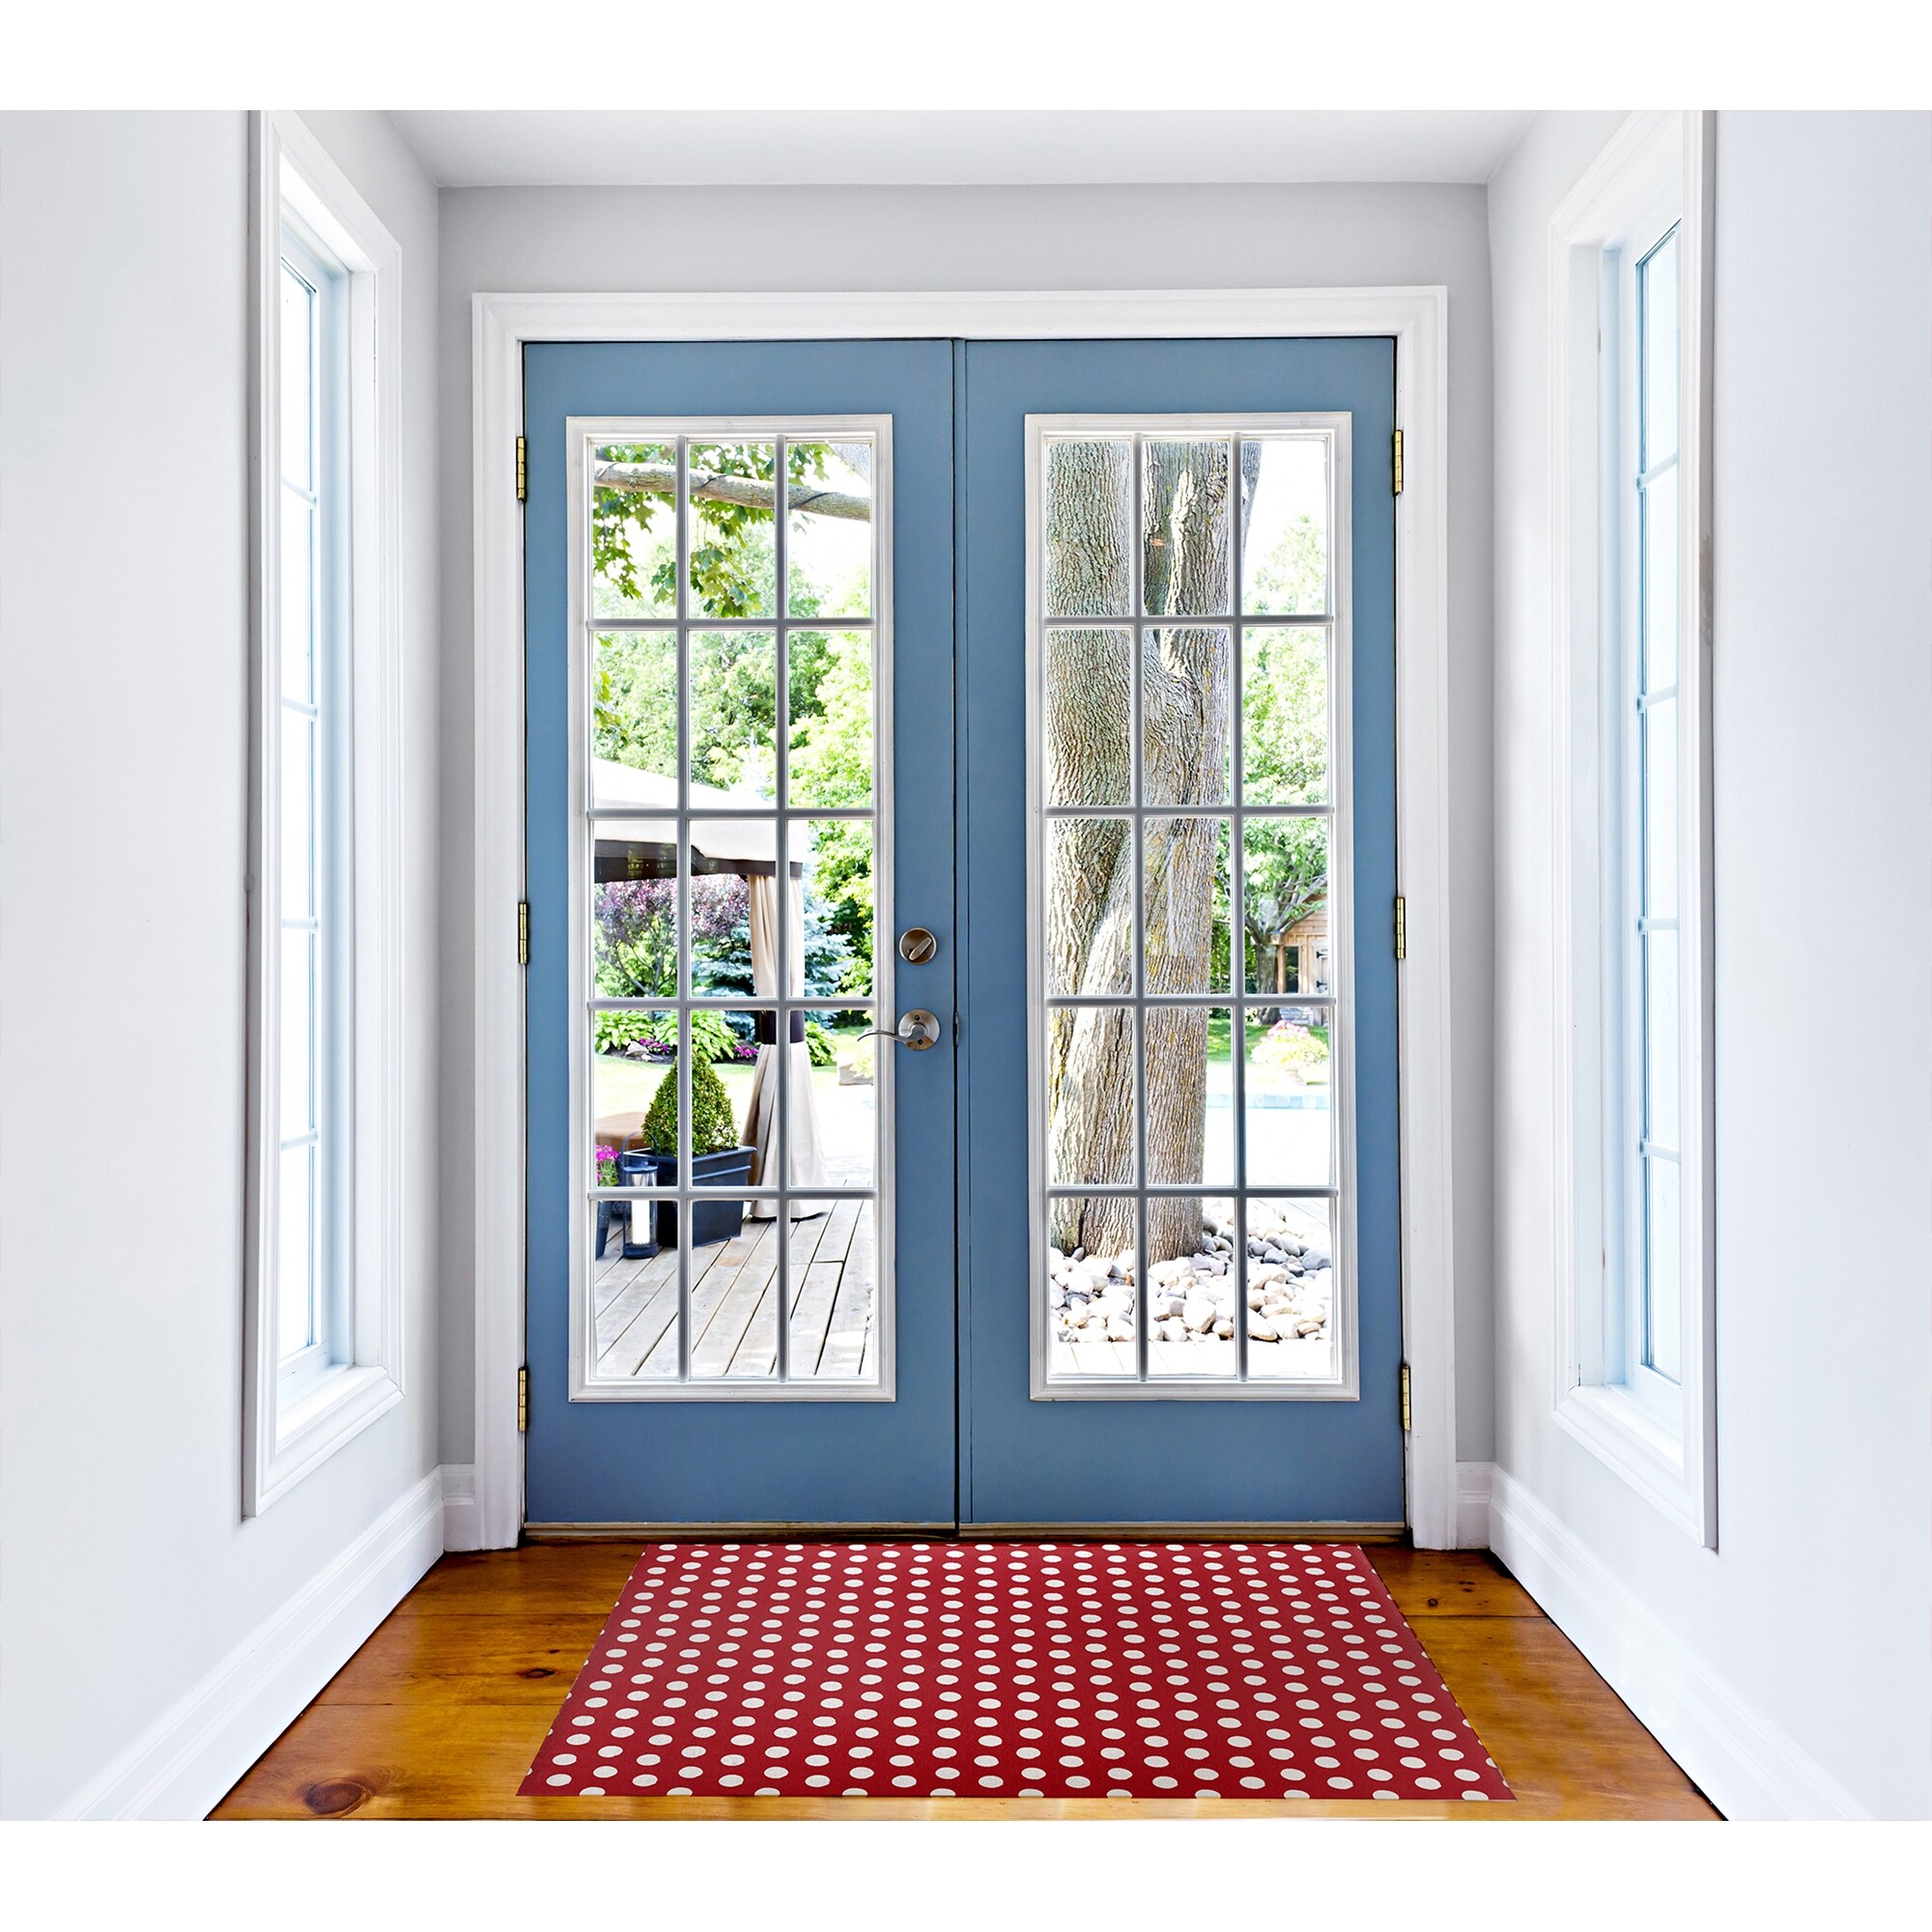 BIG POLKA DOTS RED Doormat By Kavka Designs - On Sale - Bed Bath & Beyond -  31257166